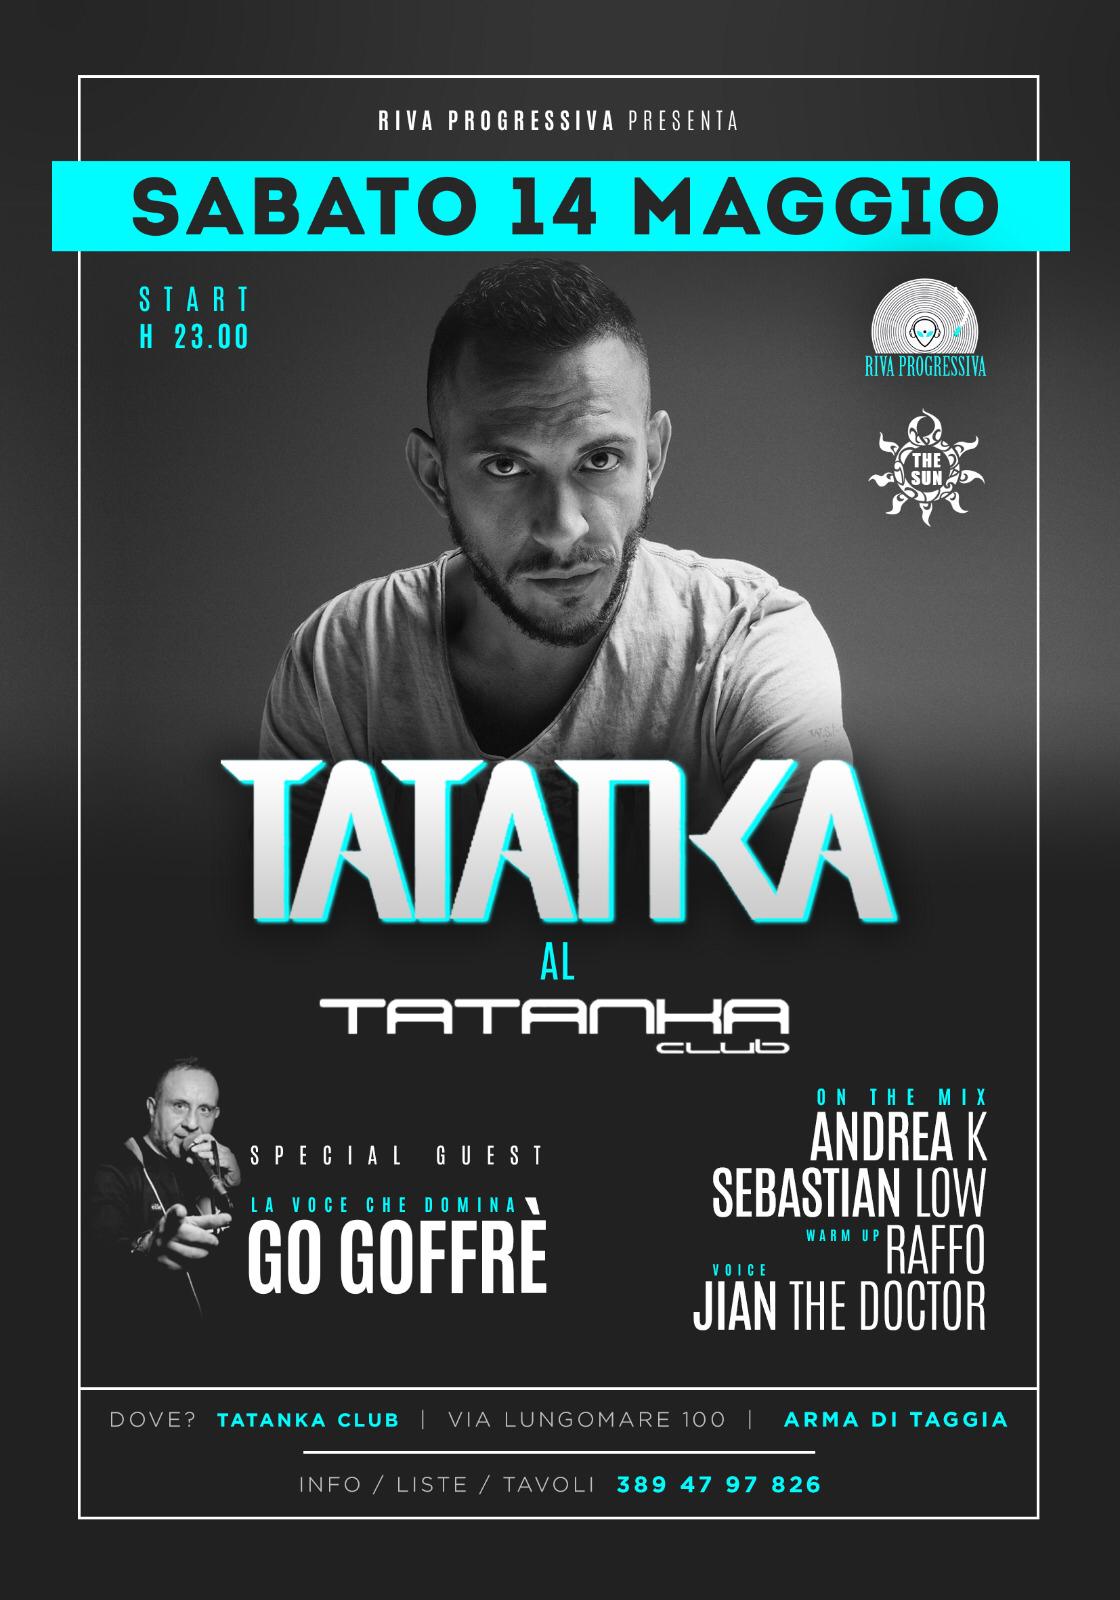 Sabato 14 Maggio TATANKA @ TATANKA Club - Arma di Taggia (Im)